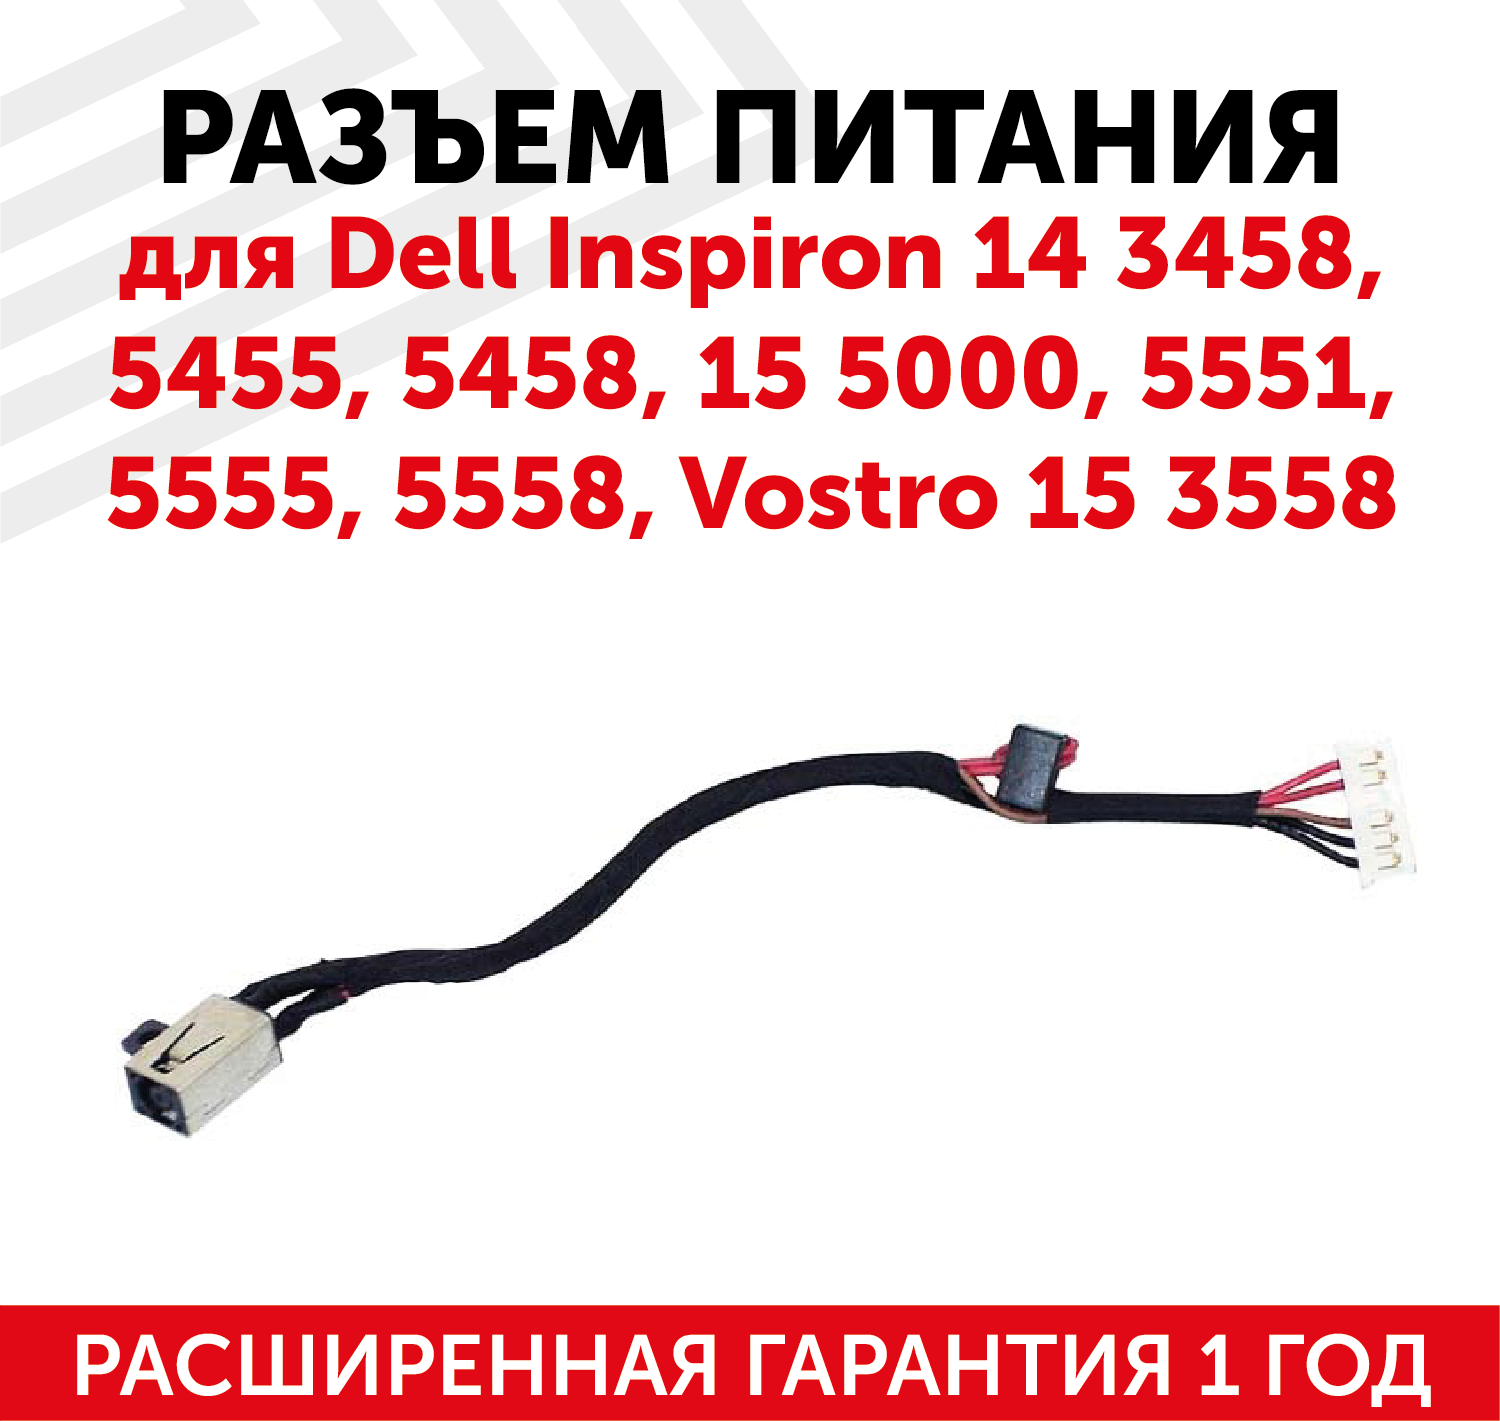 Разъем для ноутбука Dell Inspiron 14 3458 5455 5458 15 5000 5551 5555 5558 Vostro 15 3558 c кабелем.